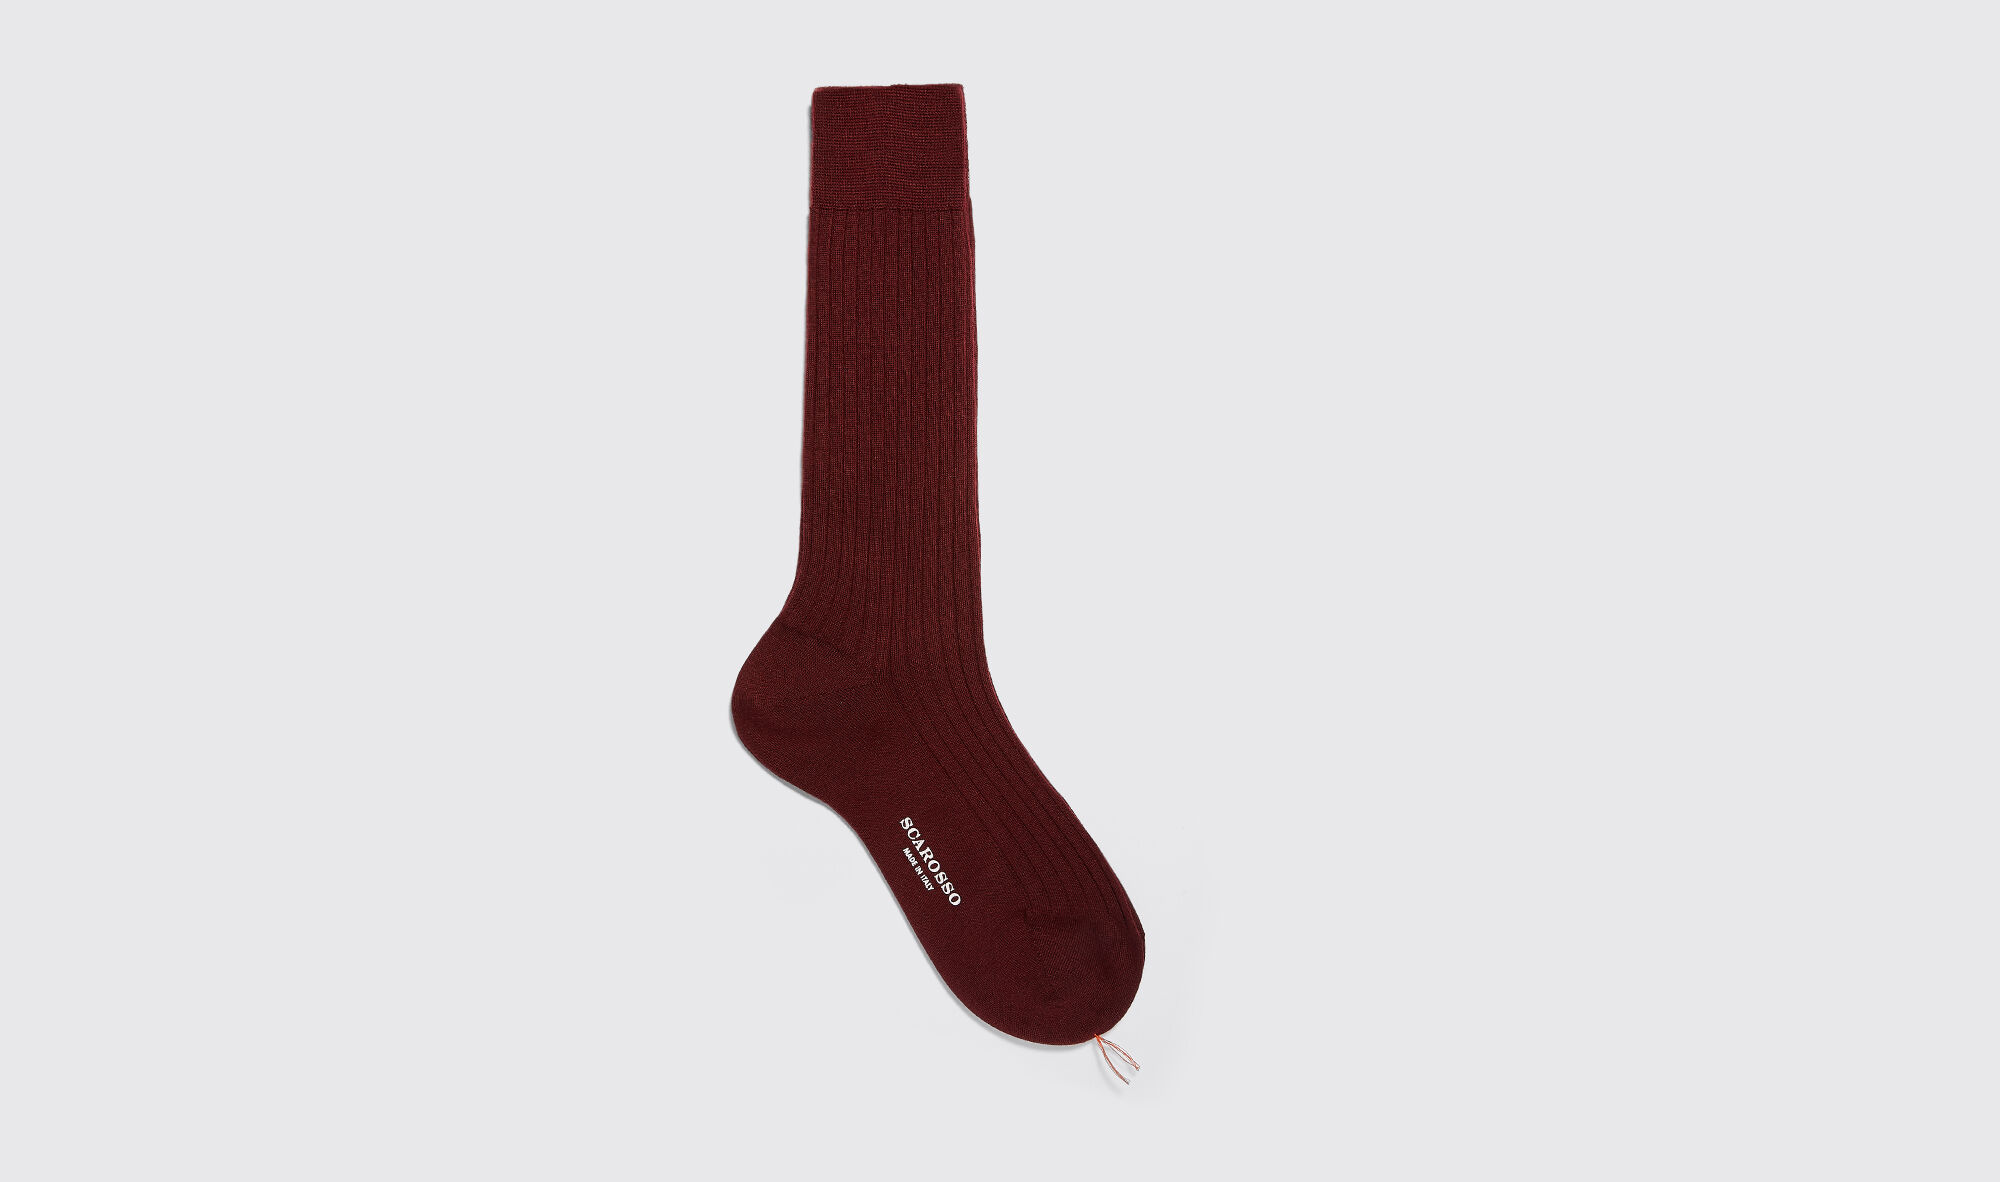 Scarosso Burgundy Wool Calf Socks - Uomo Calze Borgogna - Lana Merino 40-41